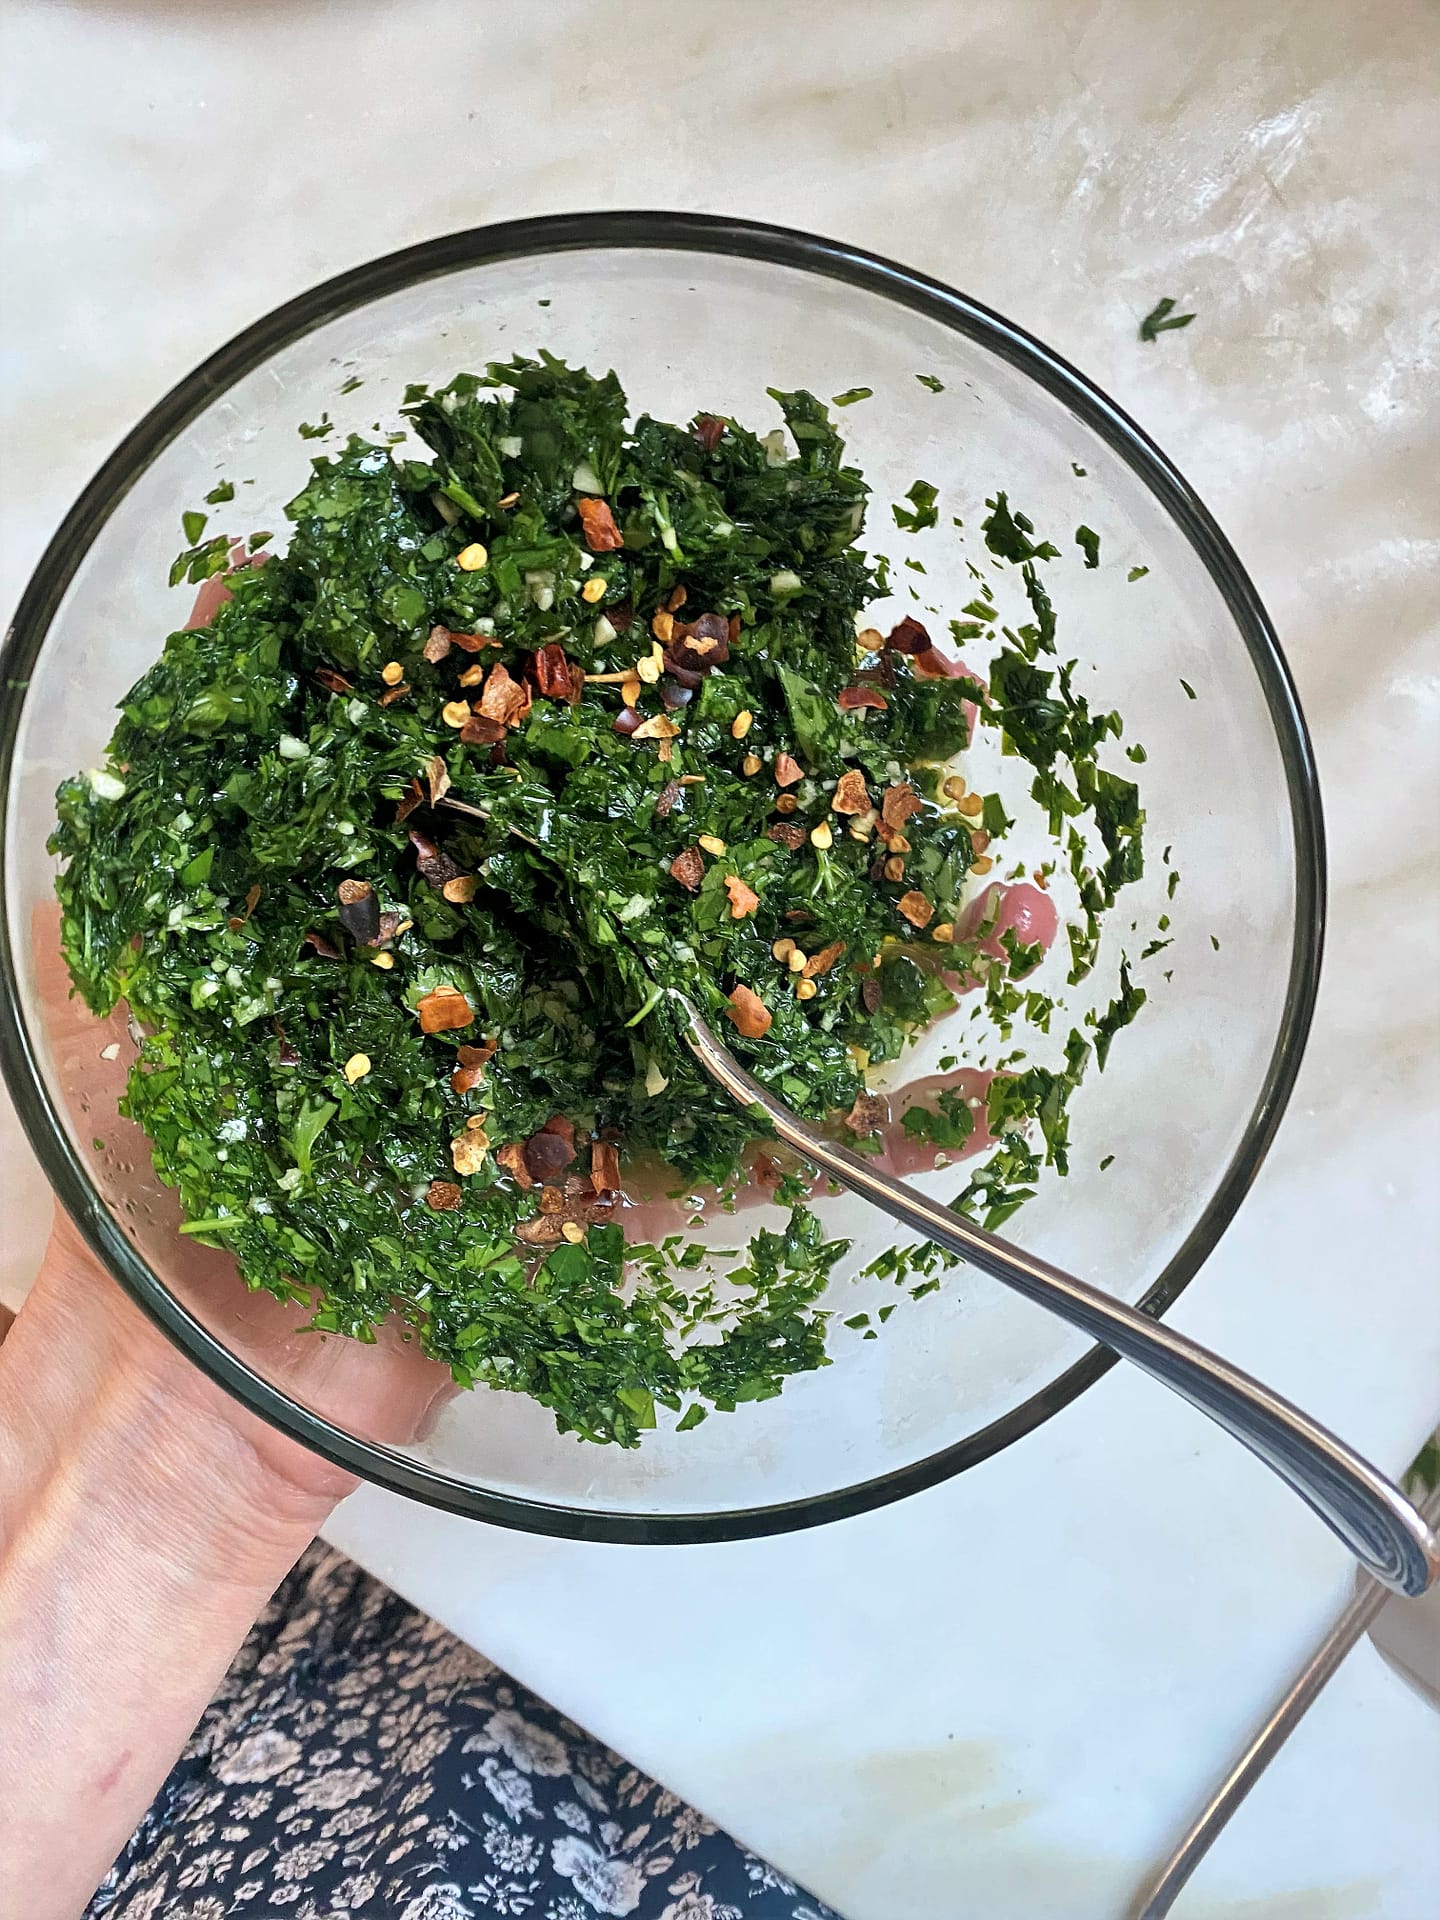 Chopped parsley, cilantro, olive oil, garlic and chili flakes for chimichurri recipe